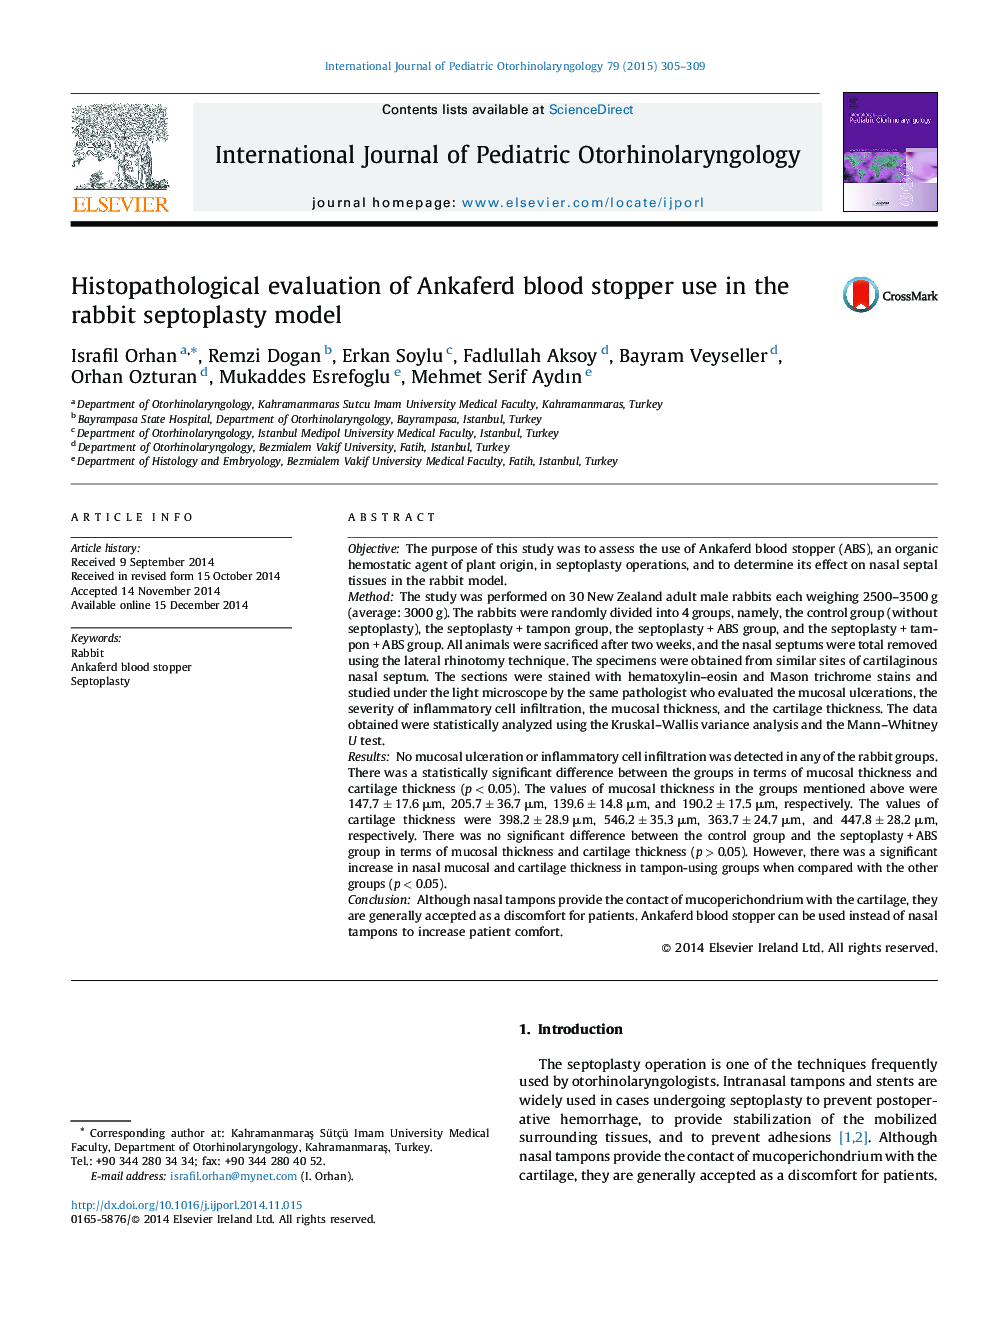 Histopathological evaluation of Ankaferd blood stopper use in the rabbit septoplasty model